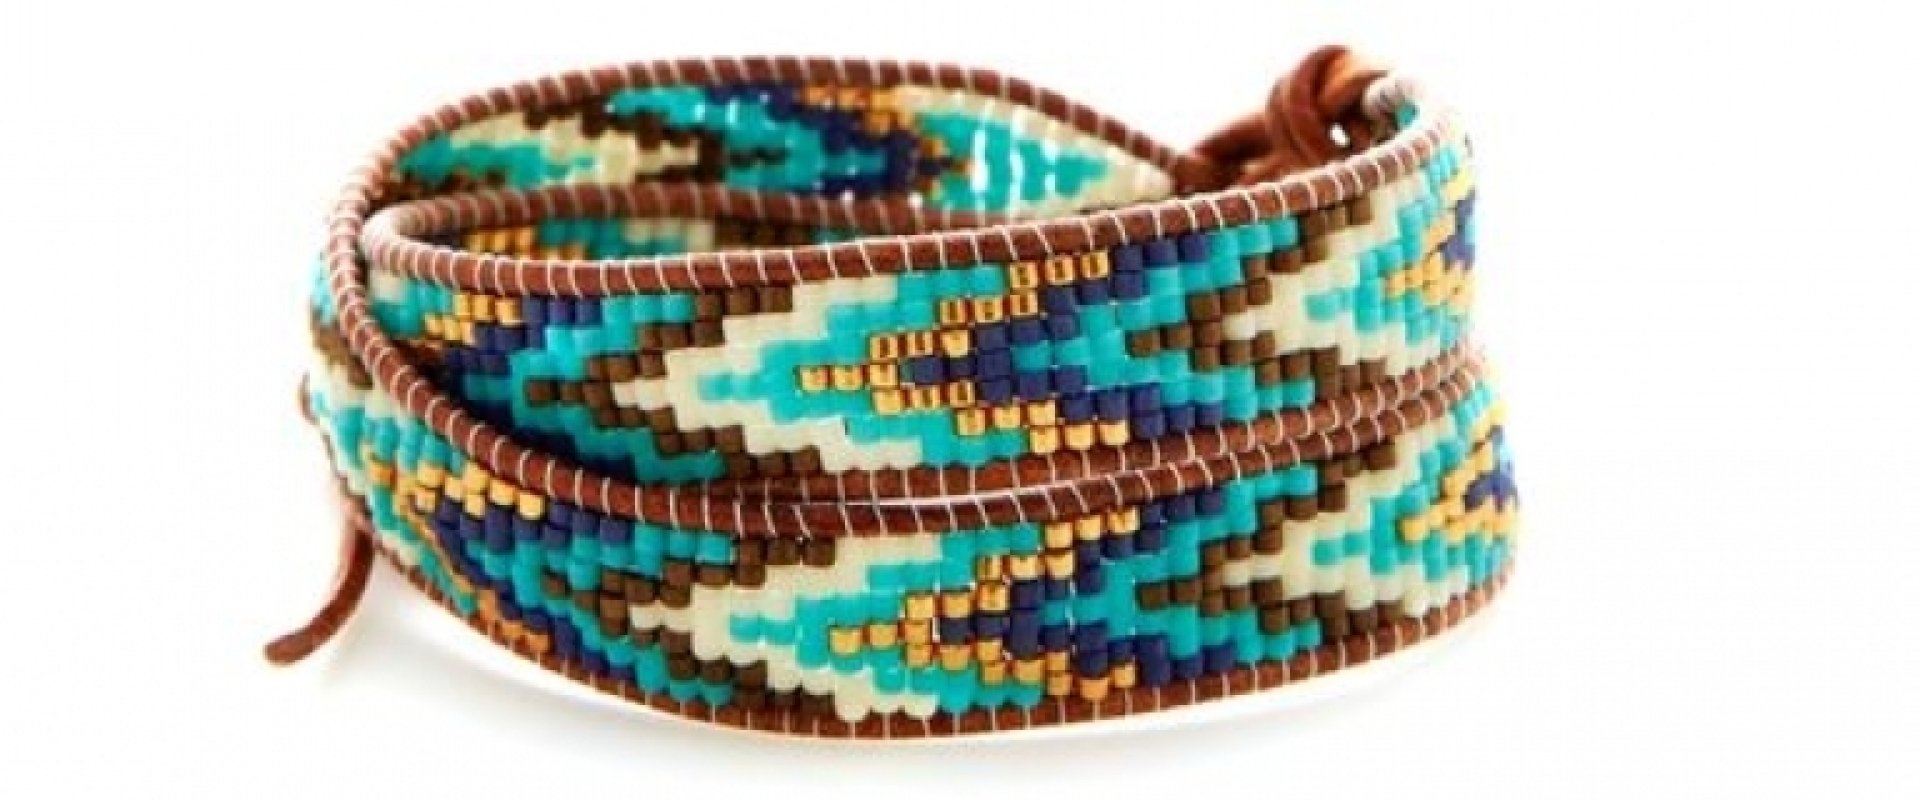 How to make a Woven Beadloom Bracelet with Miyuki beads &#8211; Tips + Patterns